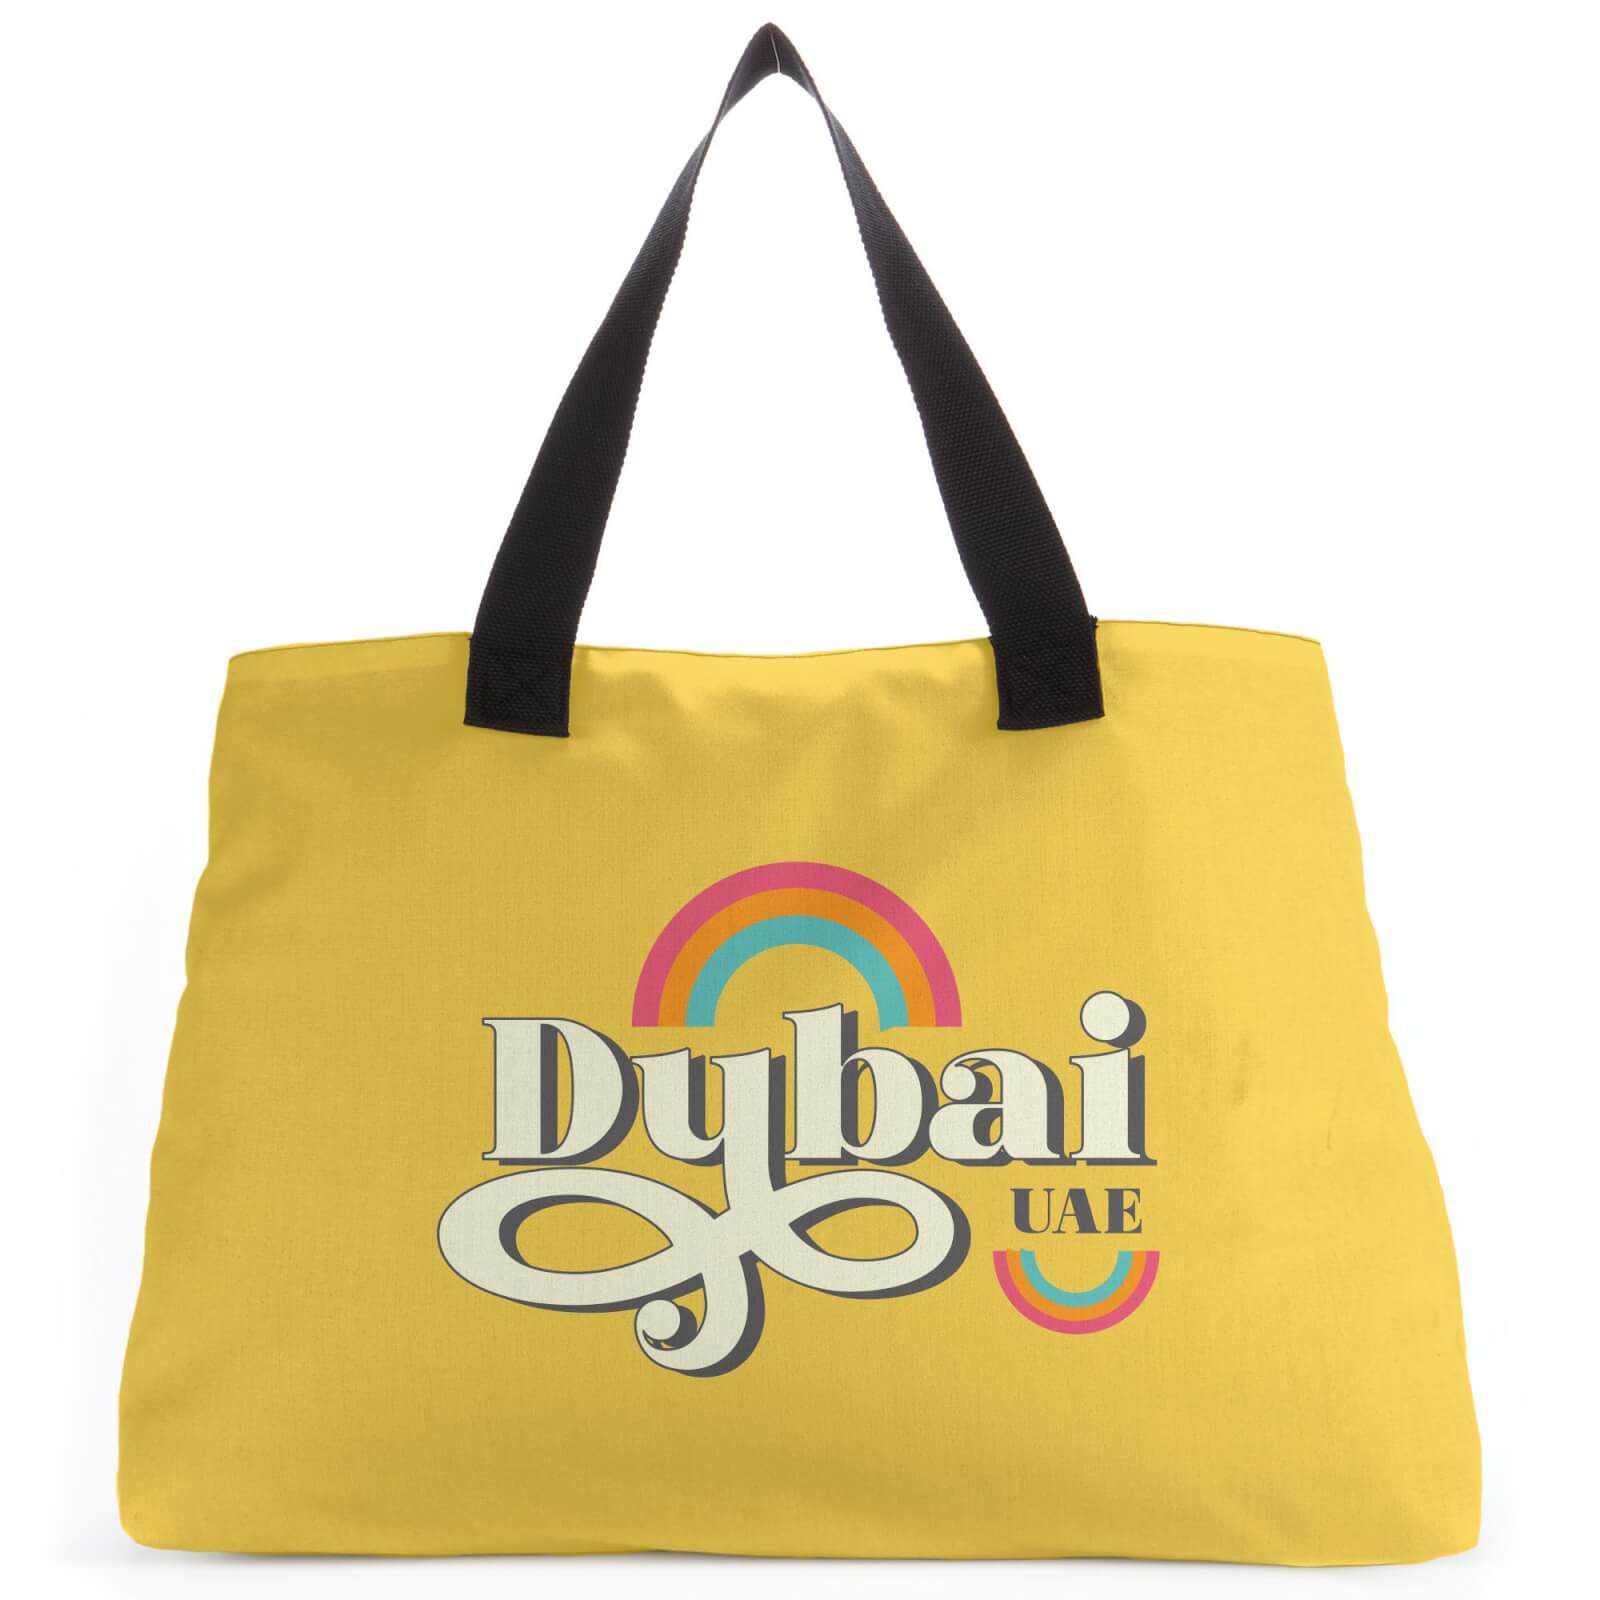 Dubai Tote Bag